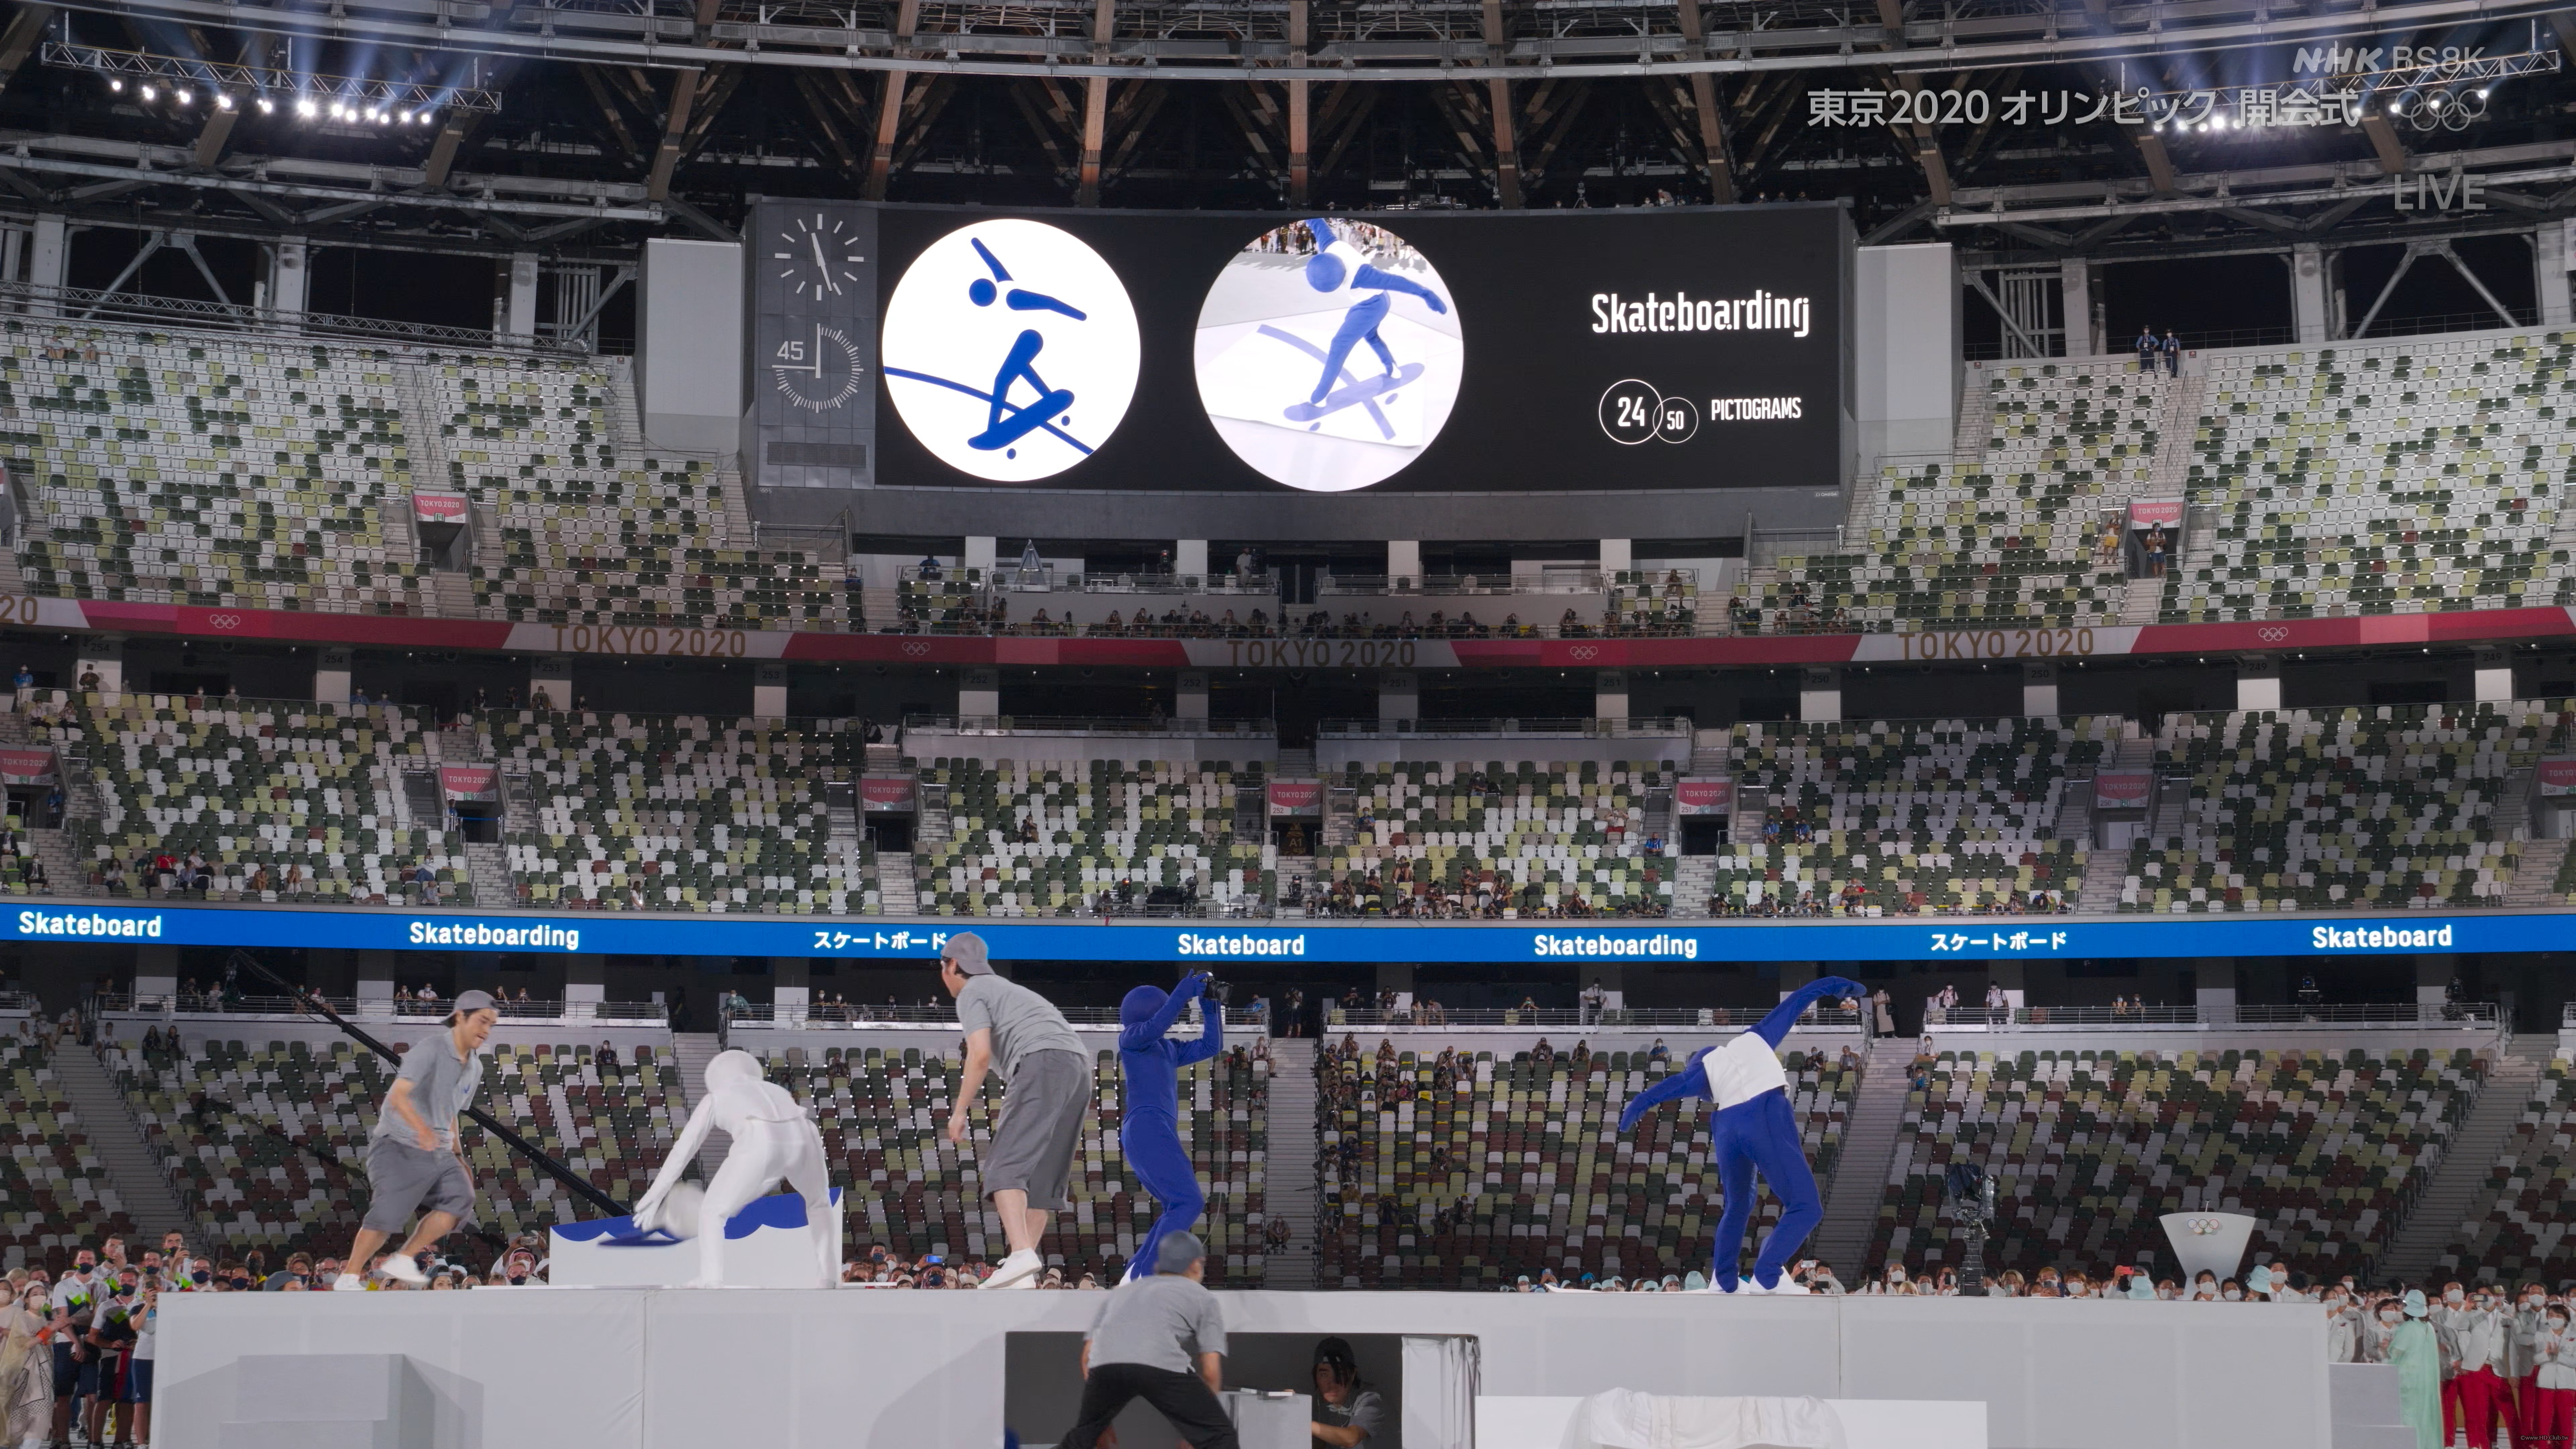 Summer Olympics Tokyo 2020 S01E01 Opening Ceremony 4320p HLG UHDTV AAC22.2 HEVC-.jpg